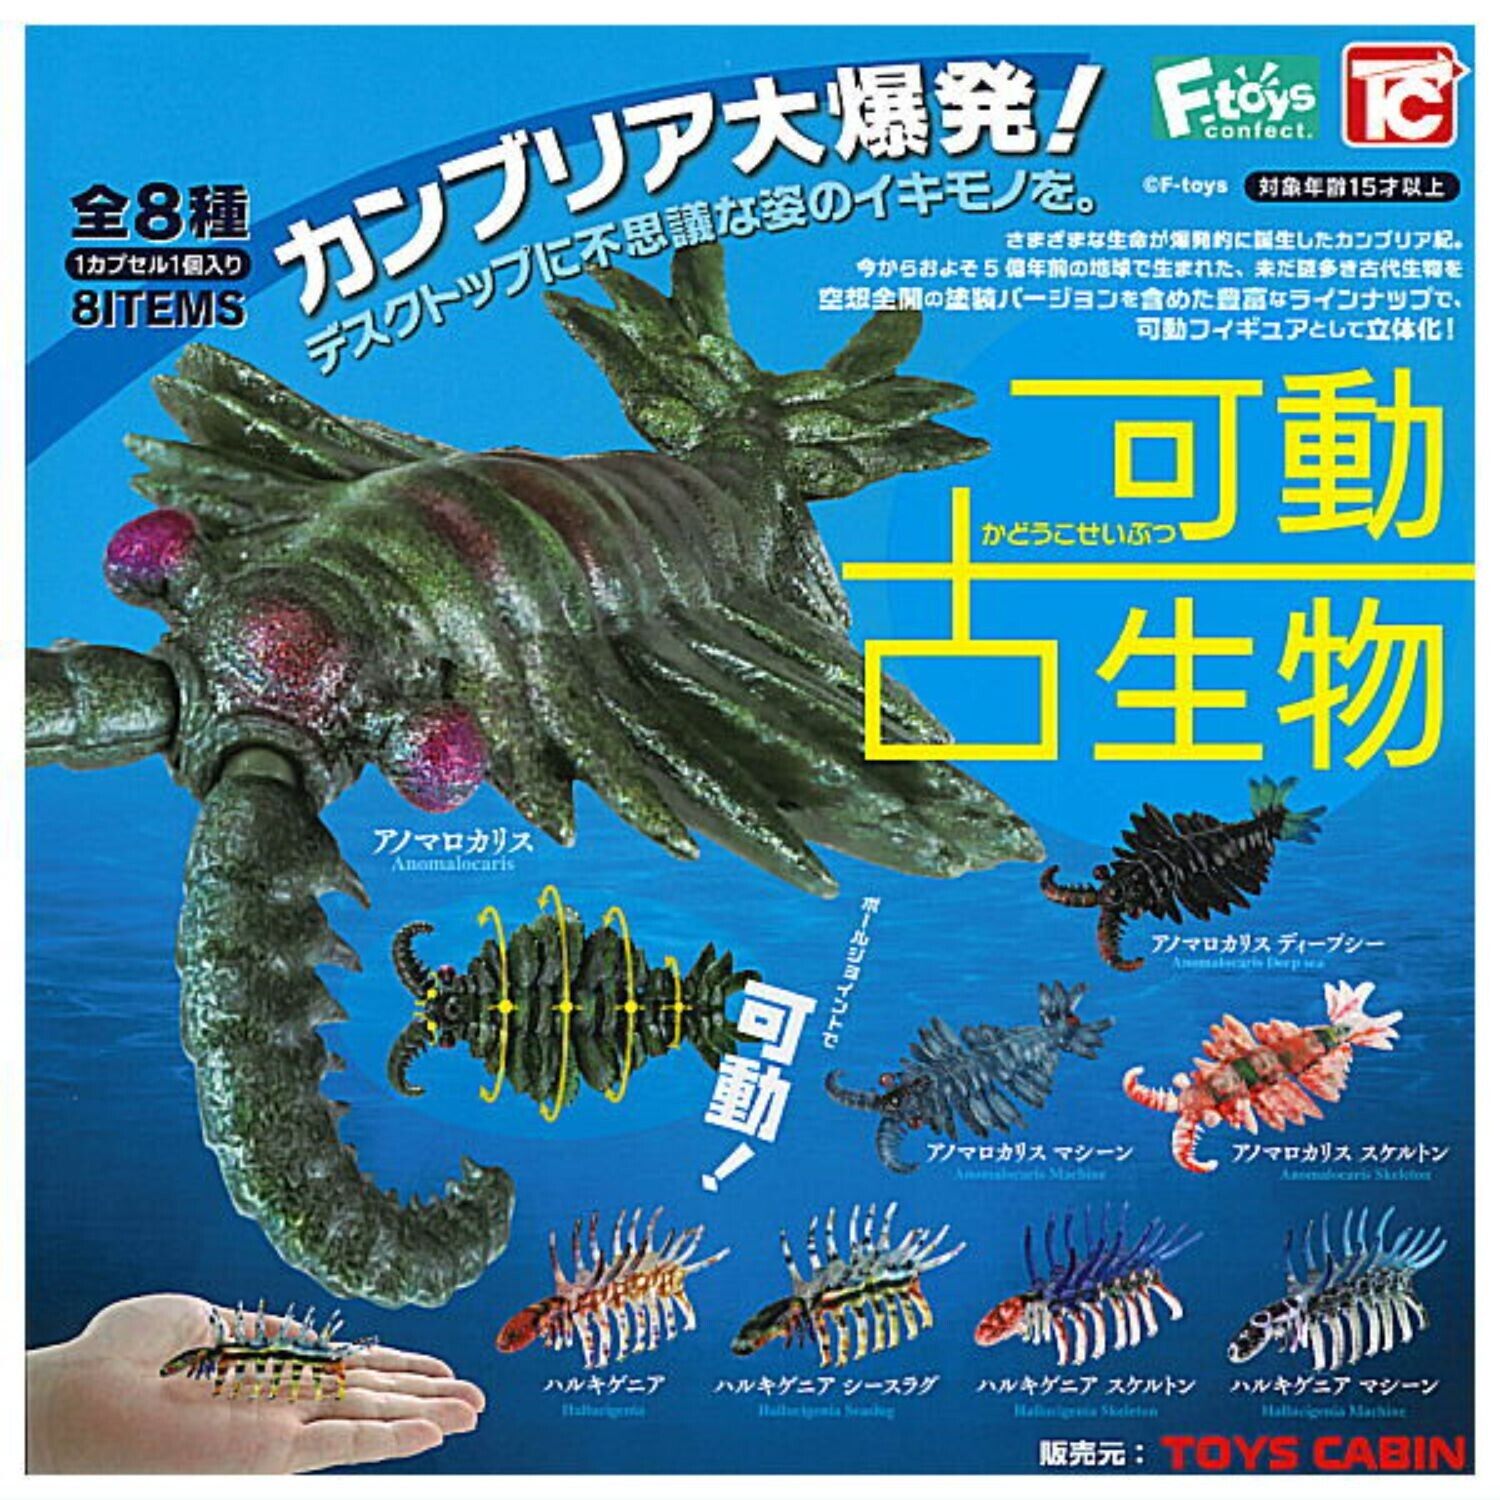 Movable paleontology Mascot Capsule Toy 8 Types Full Comp Set Gacha New Japan